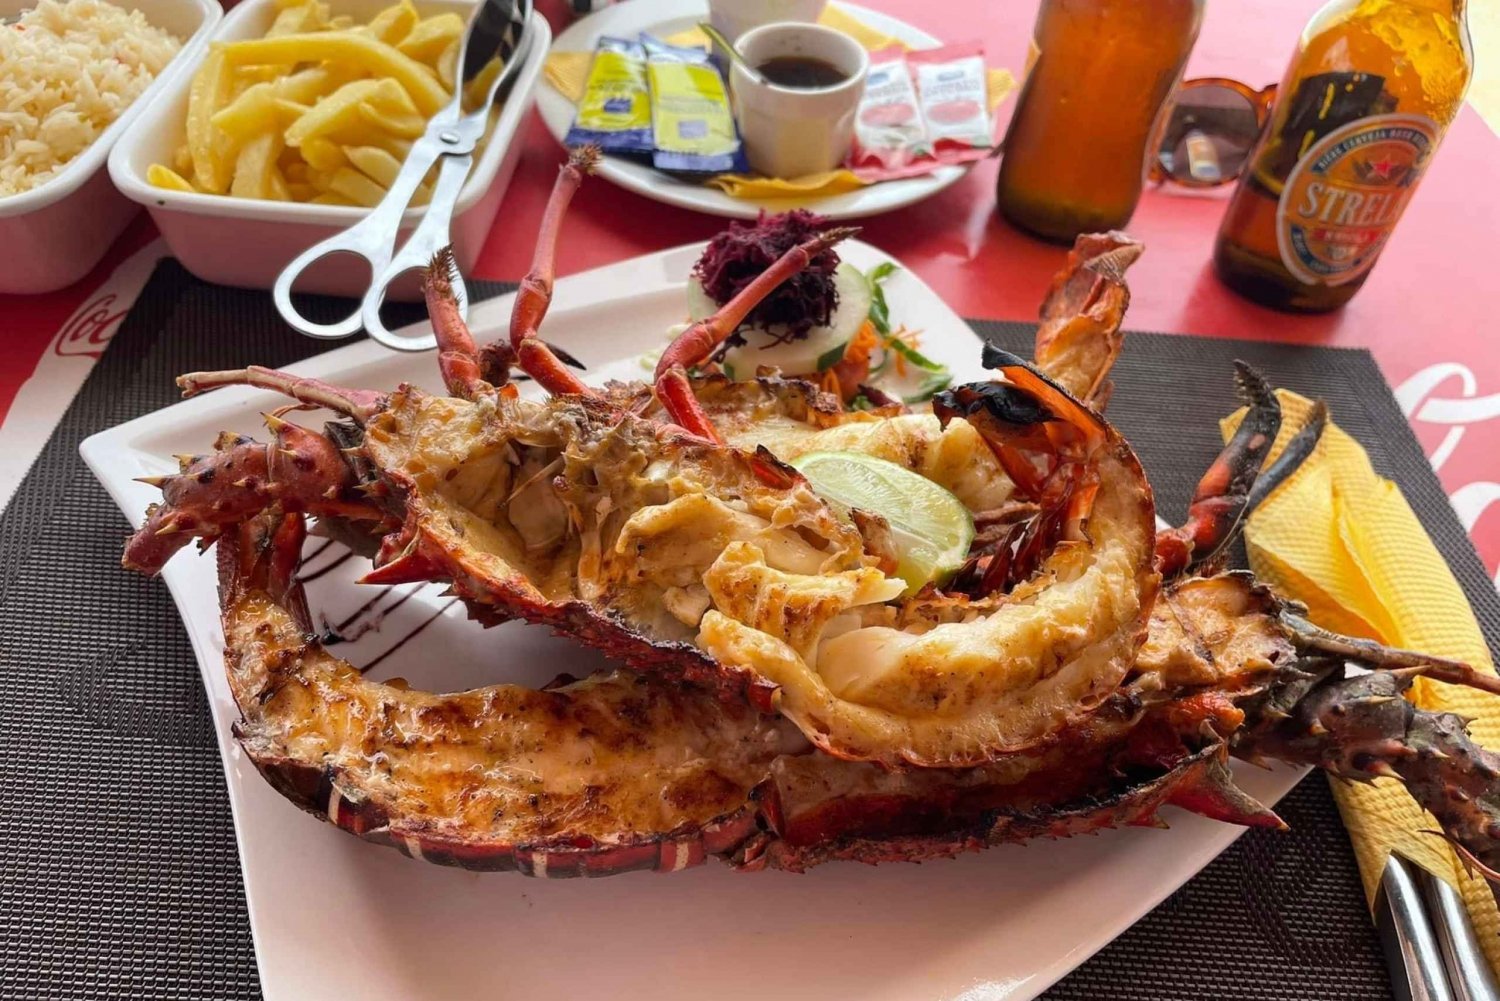 From Boa Vista: Lobster lunch at Santa Monica beach